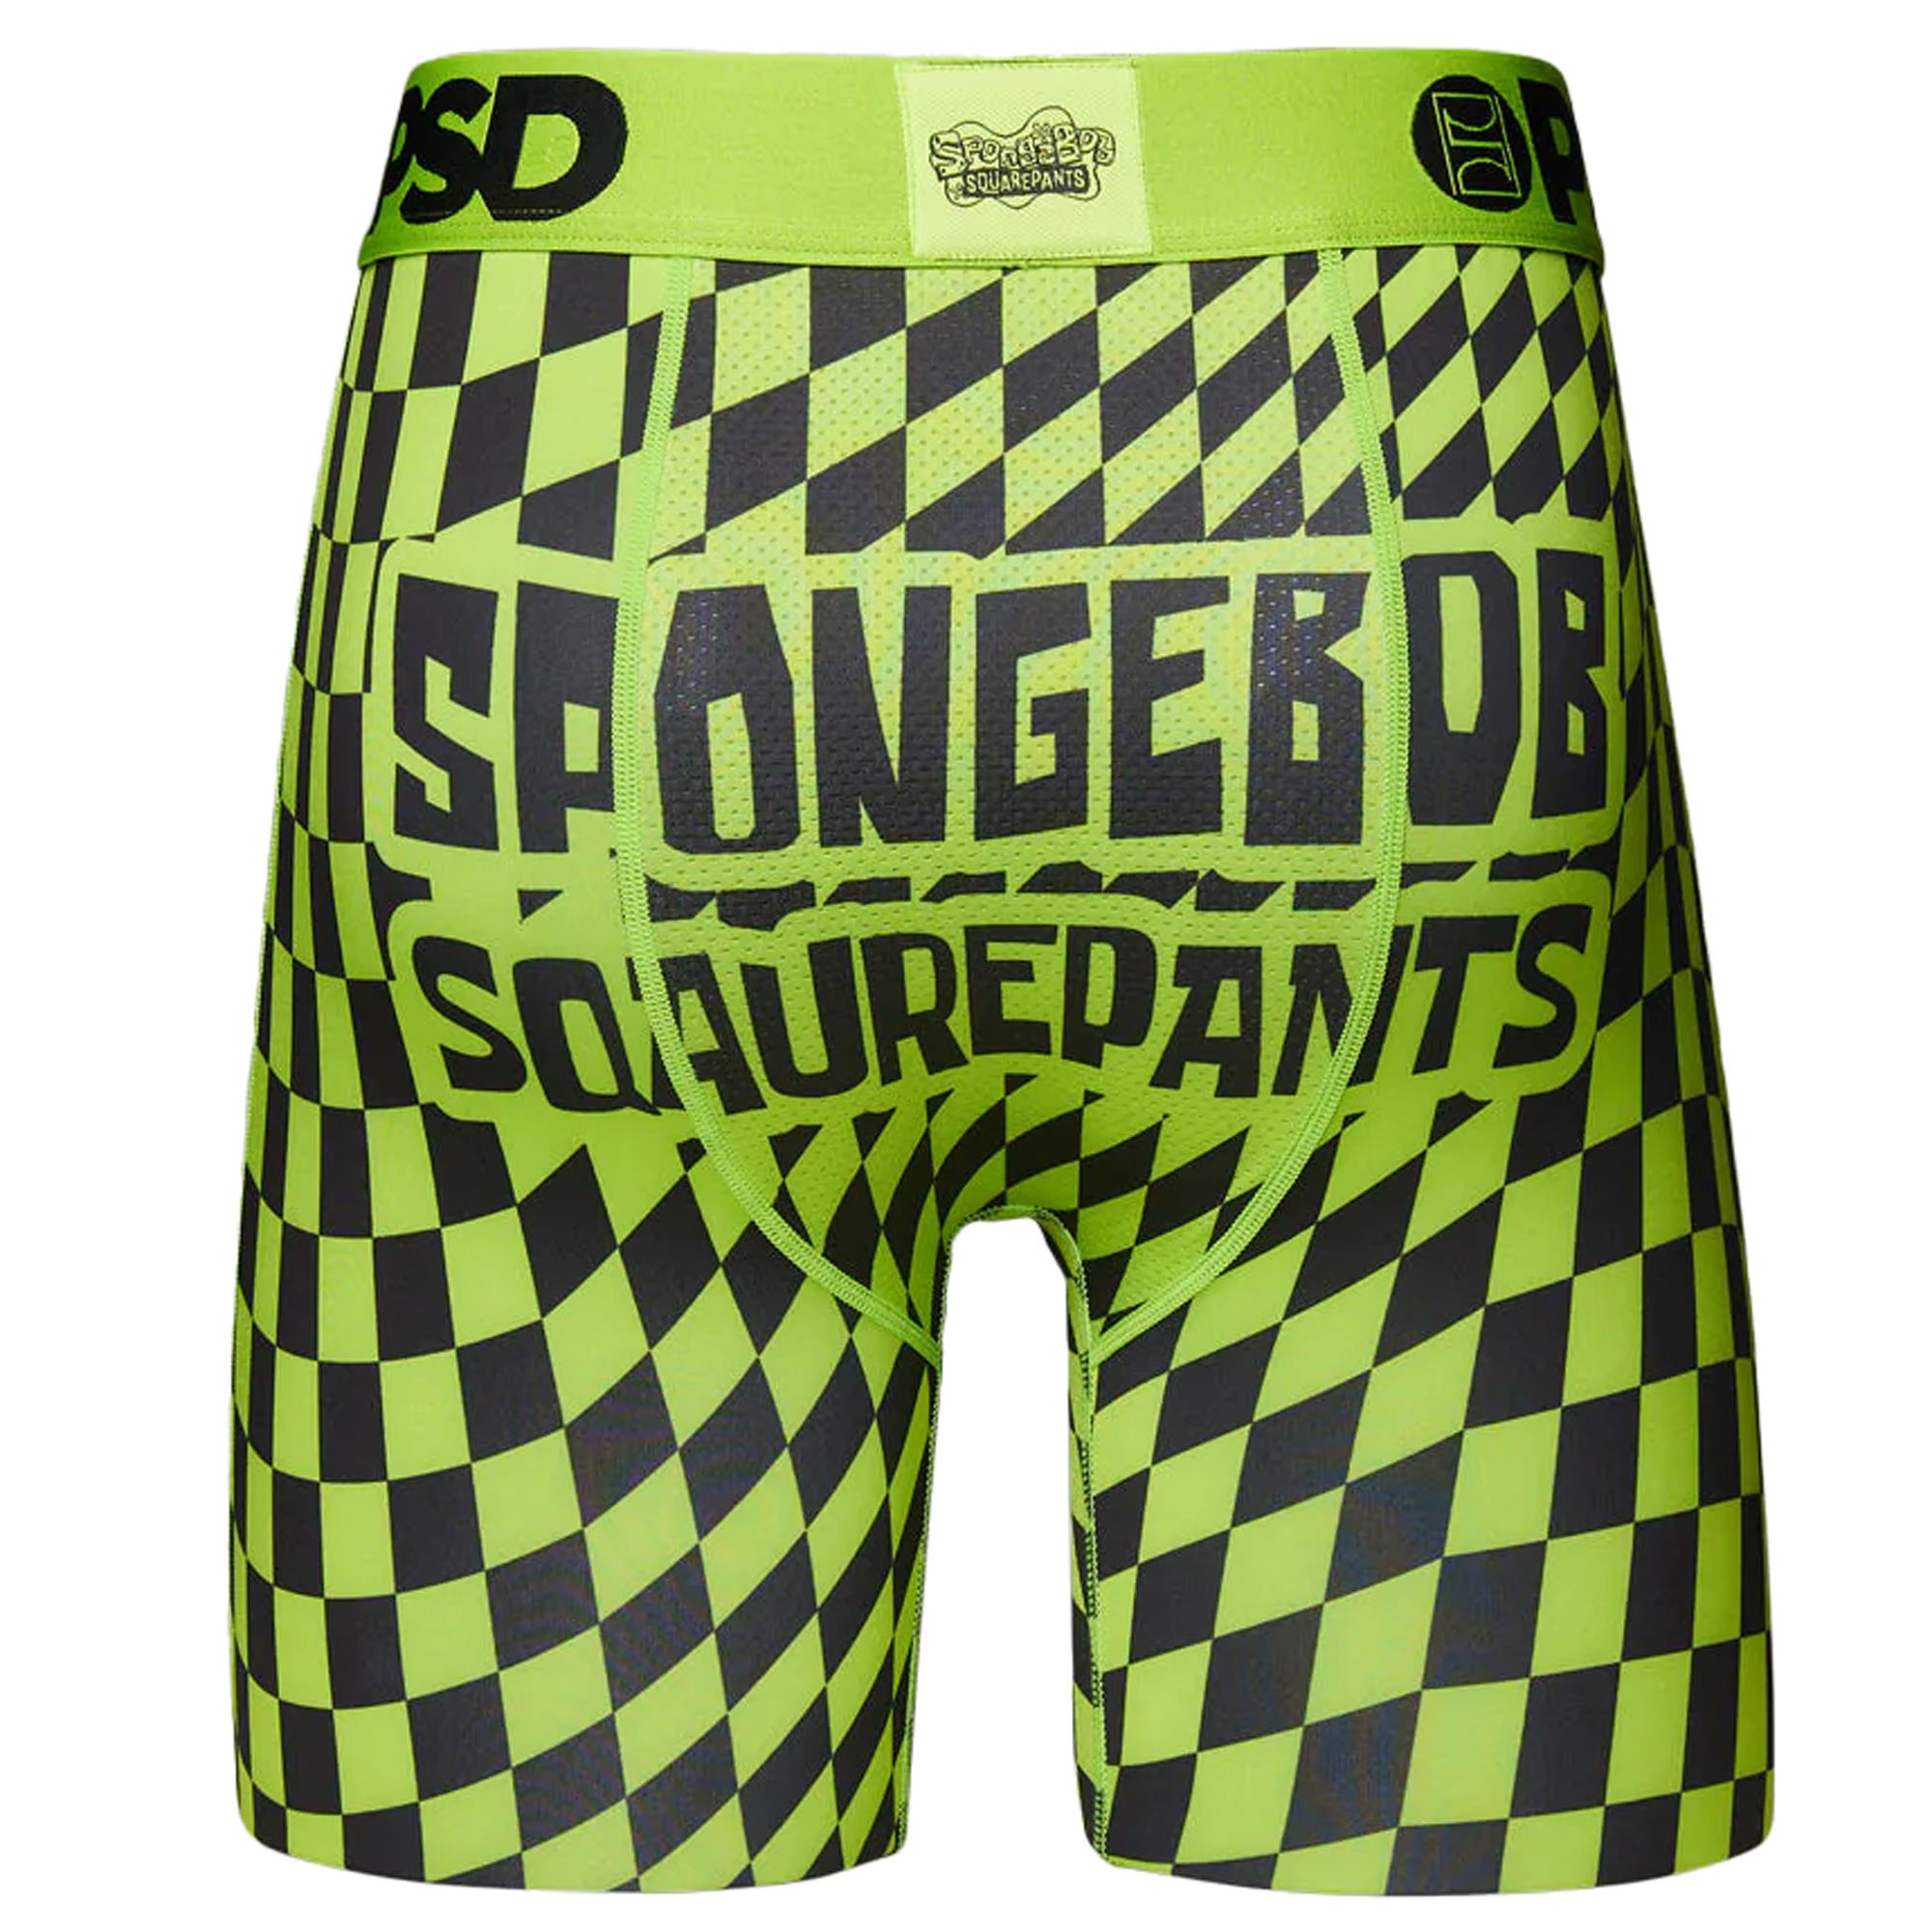 PSD Spongebob - Spongebob Is Lit Boxer Briefs 222180015 - Shiekh